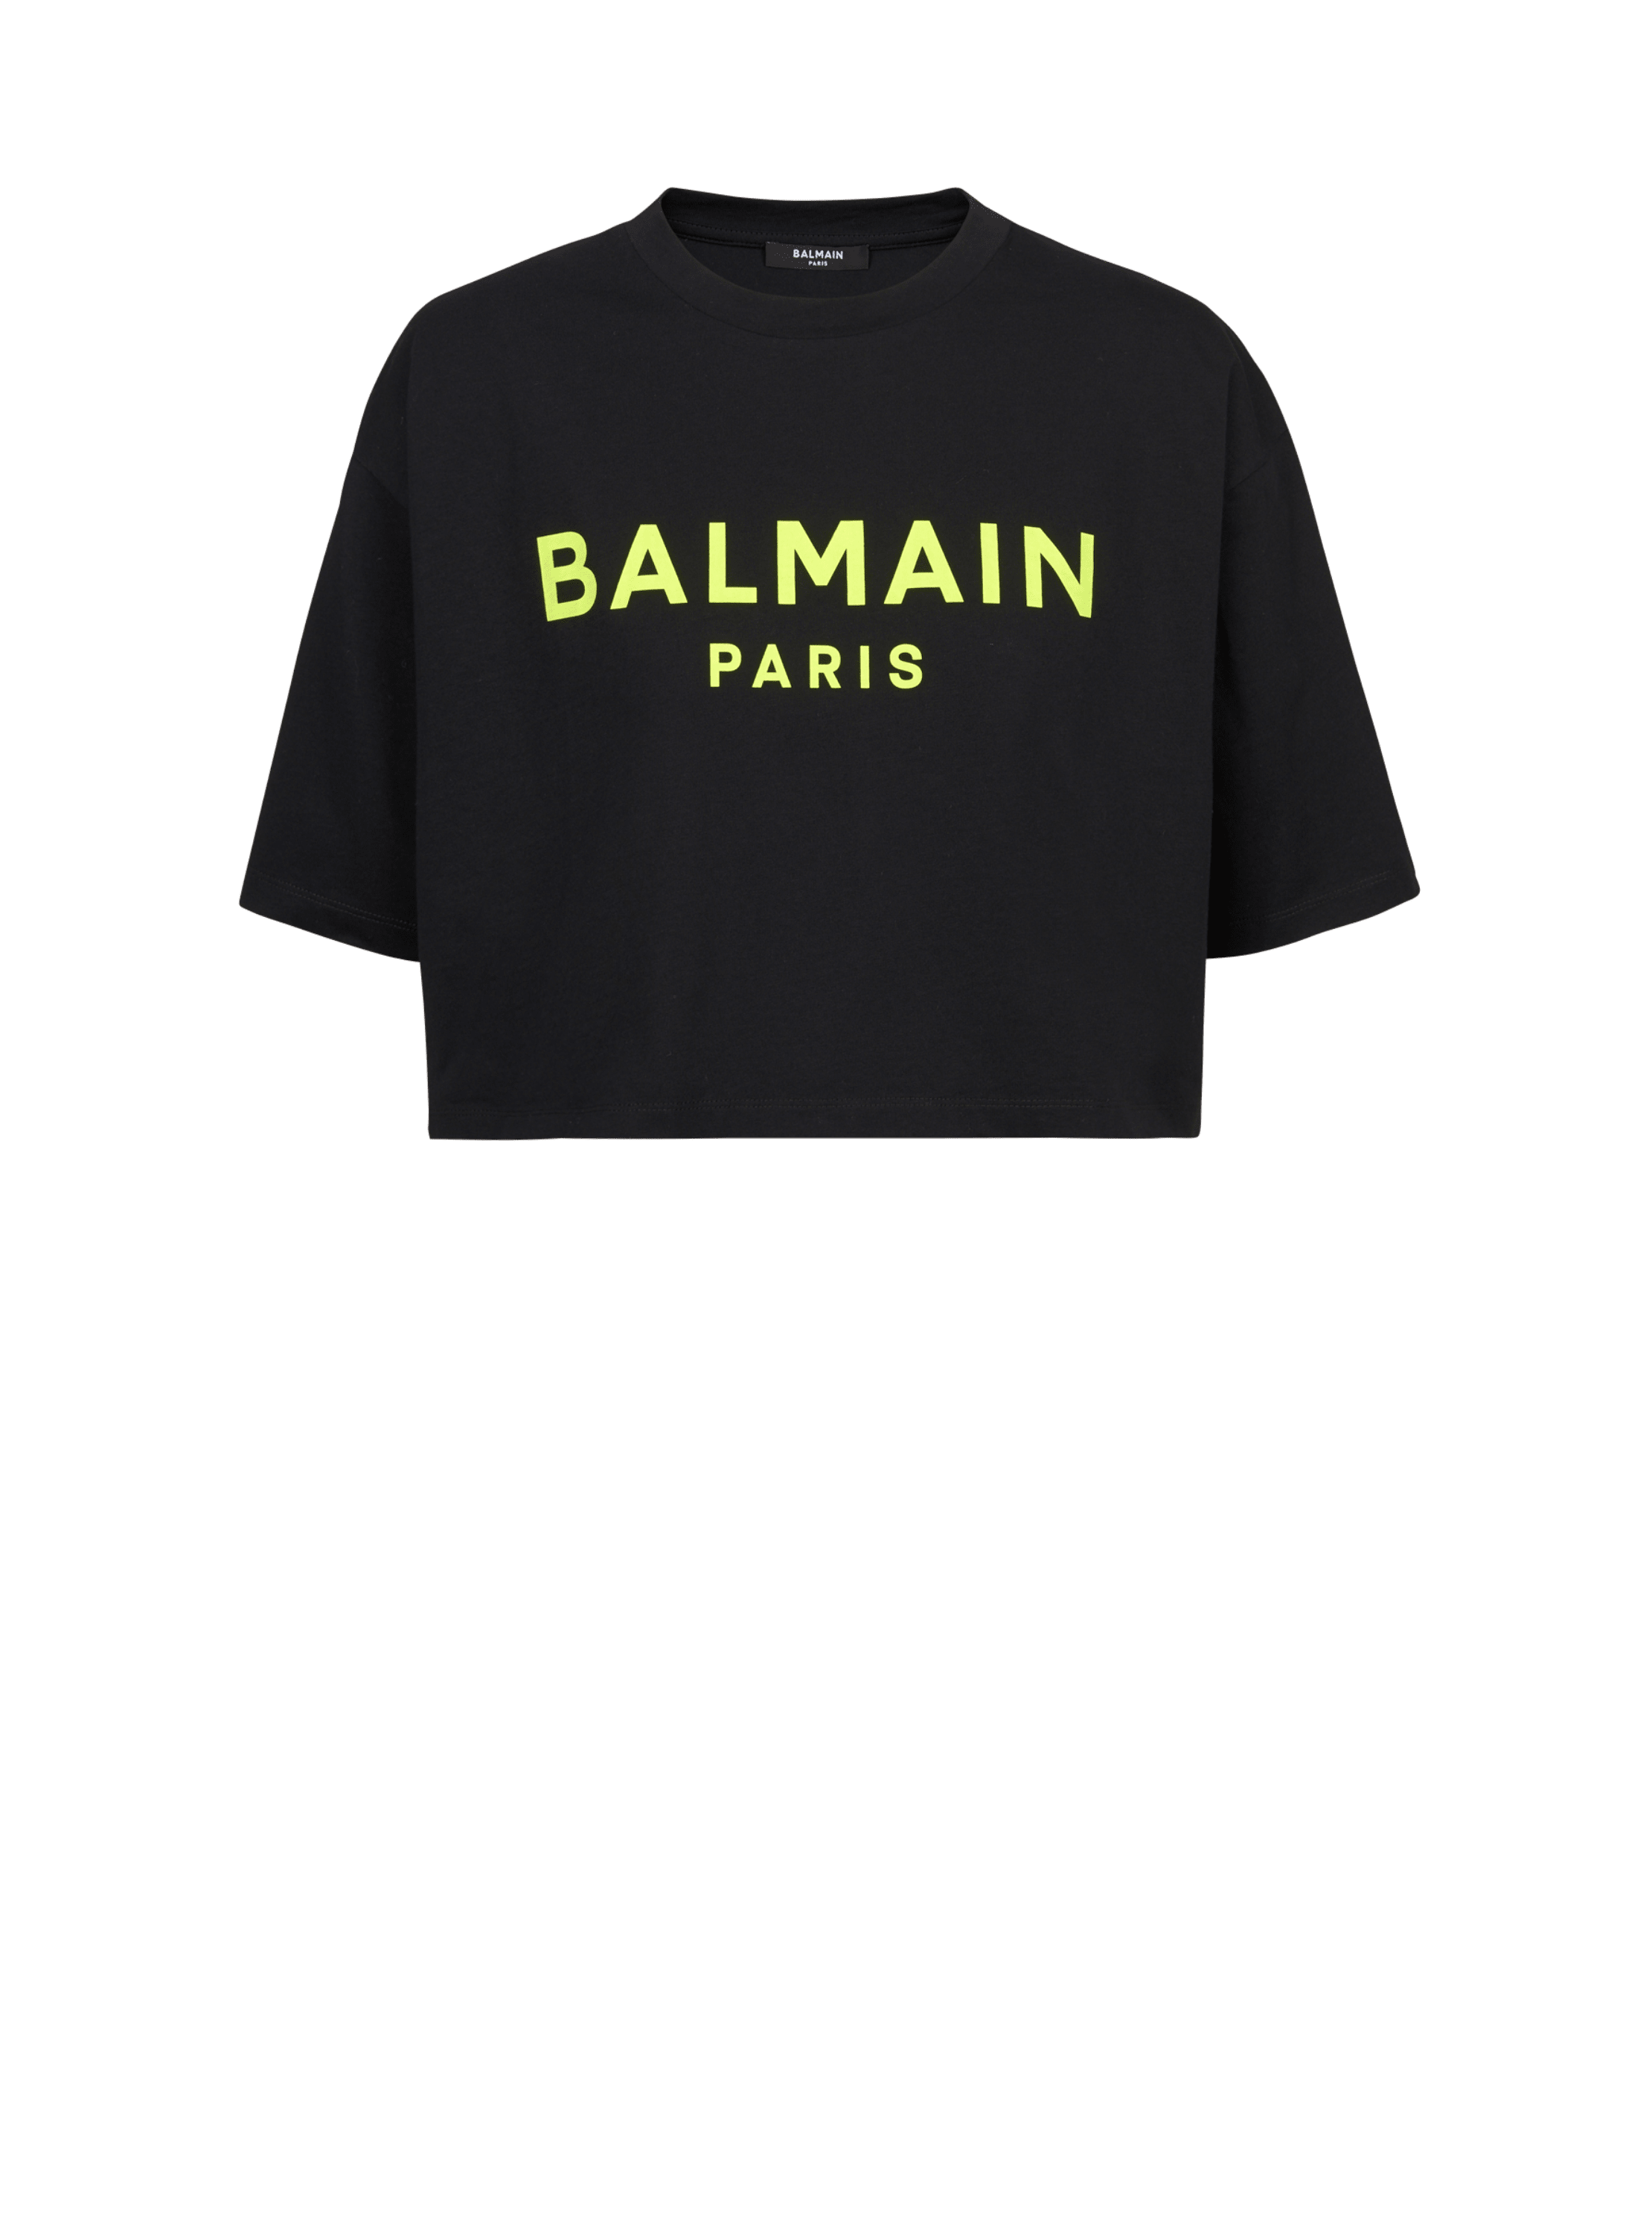 20 BALMAIN ブラック ロゴ Tシャツ size XL